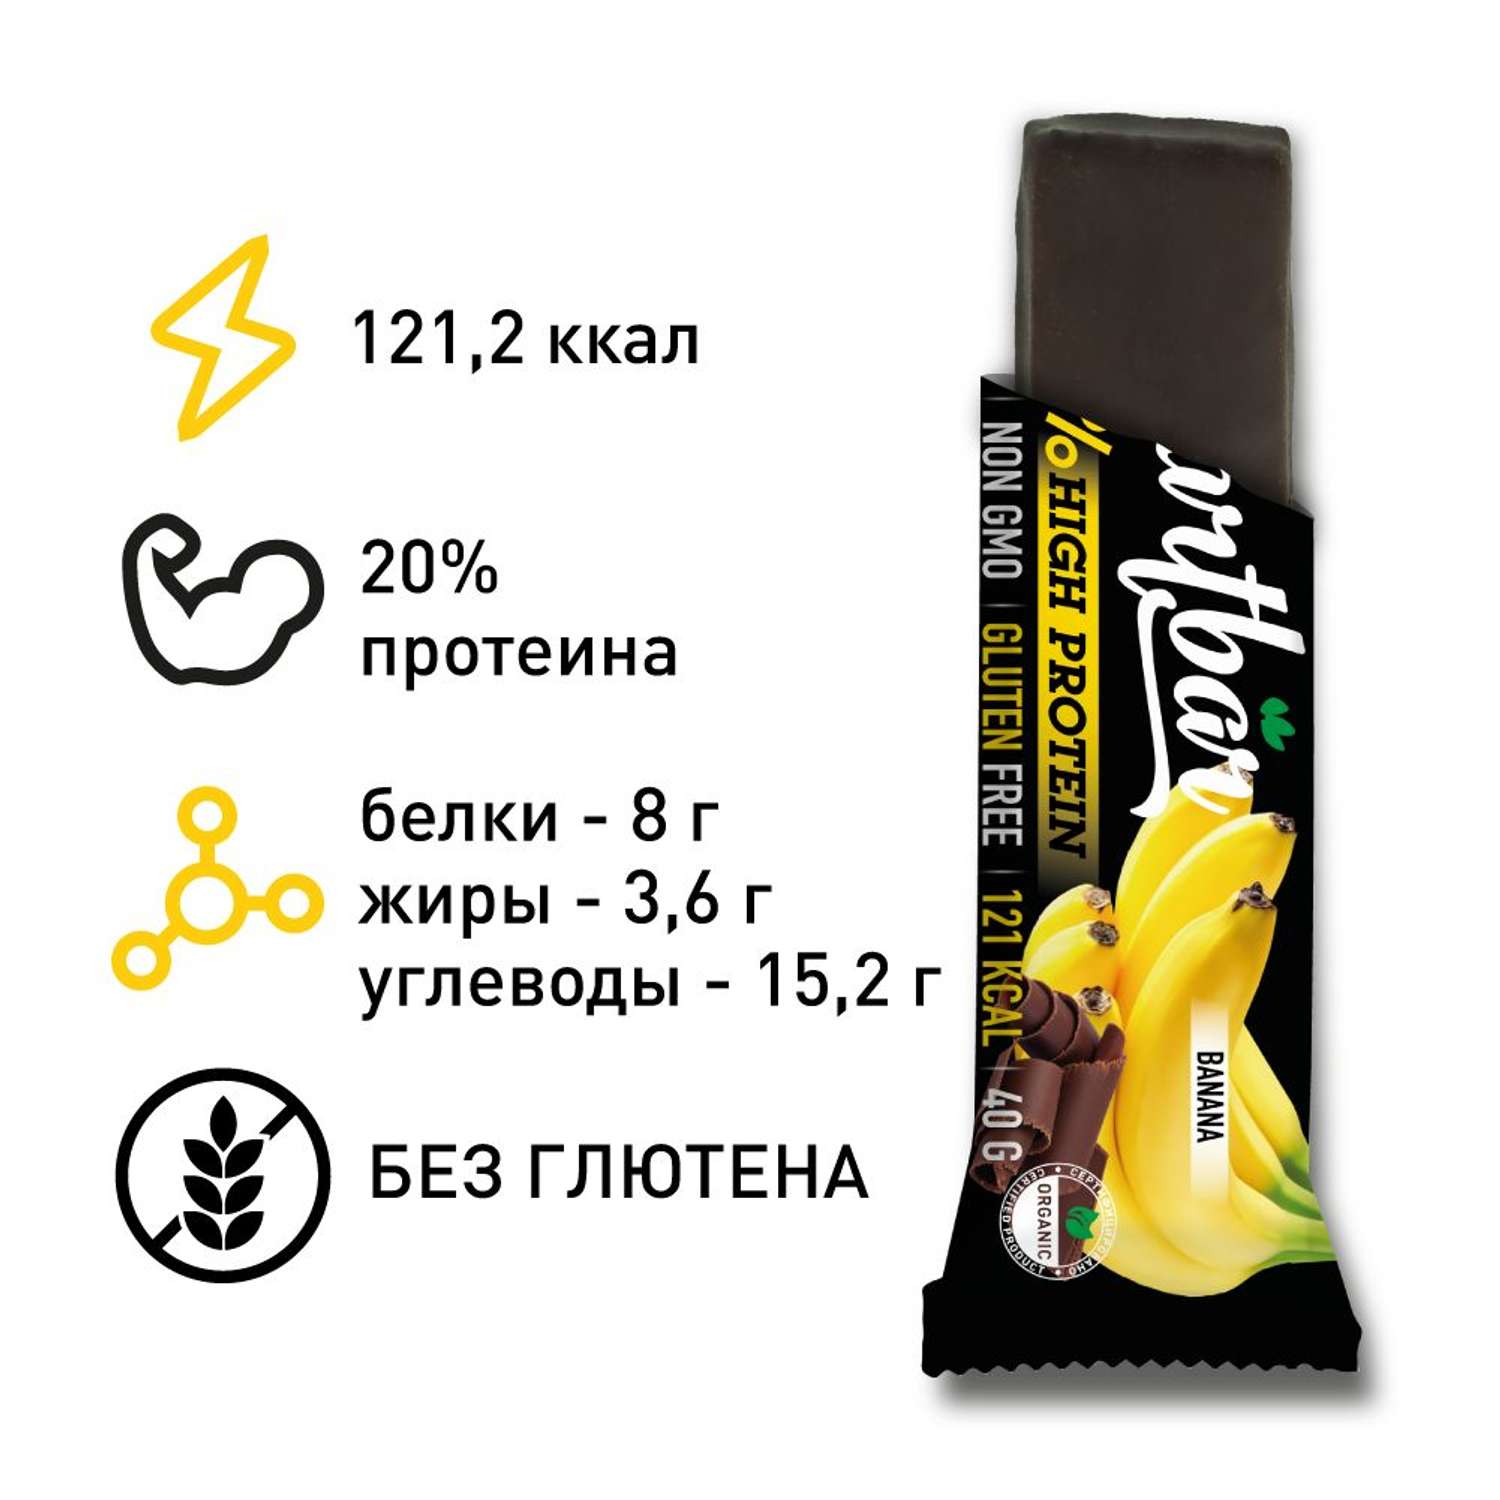 Протеиновые батончики Smartbar АССОРТИ 8 шт. Смартбар Банан Шоколад Абрикос Кокос Груша - фото 1